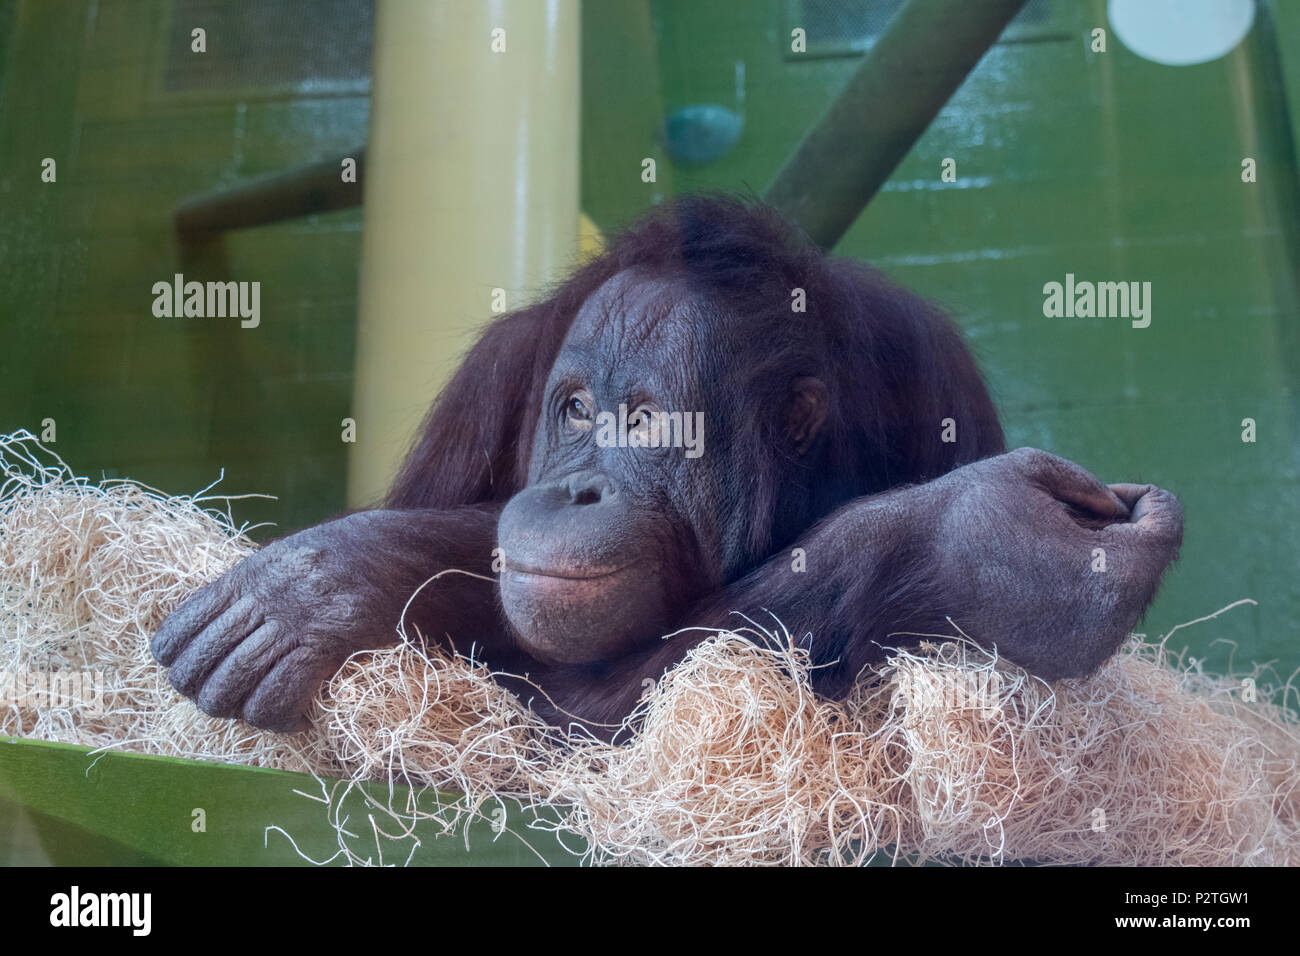 orangutan bored and lonely Stock Photo